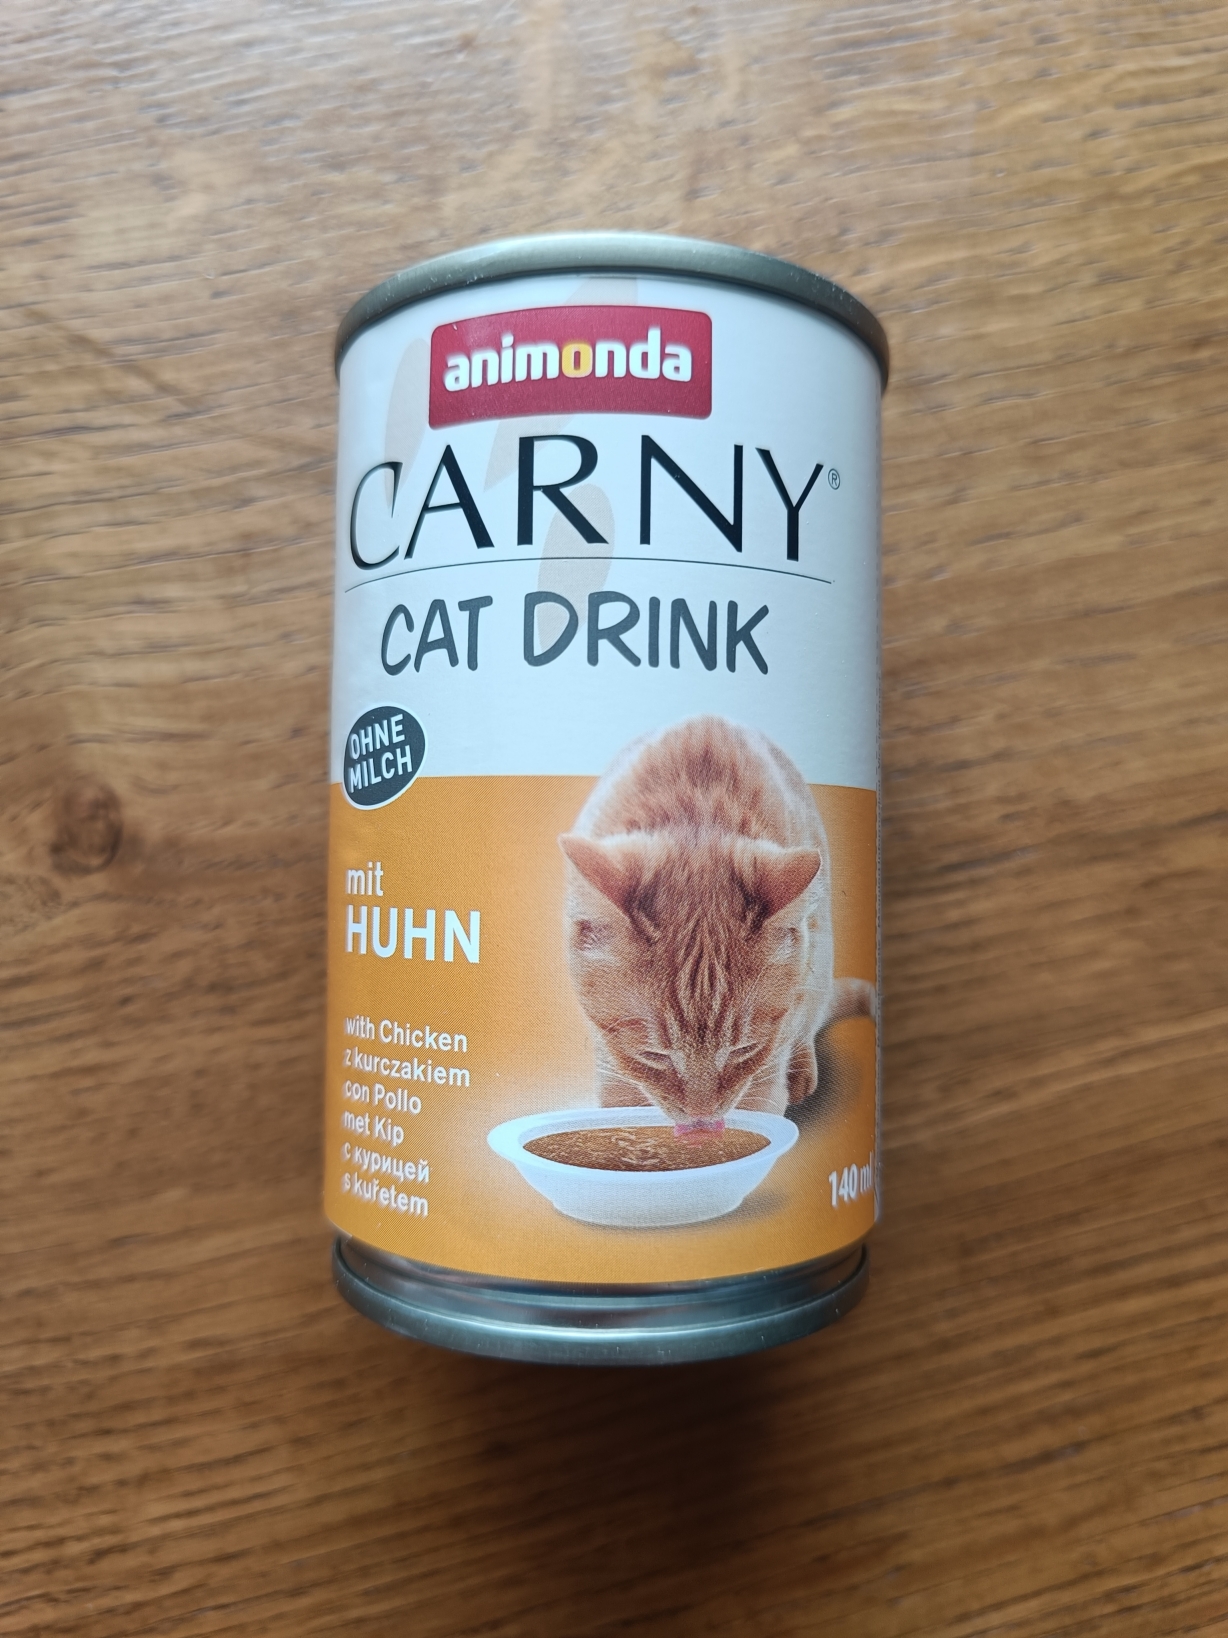 Carny Catdrink von Animonda